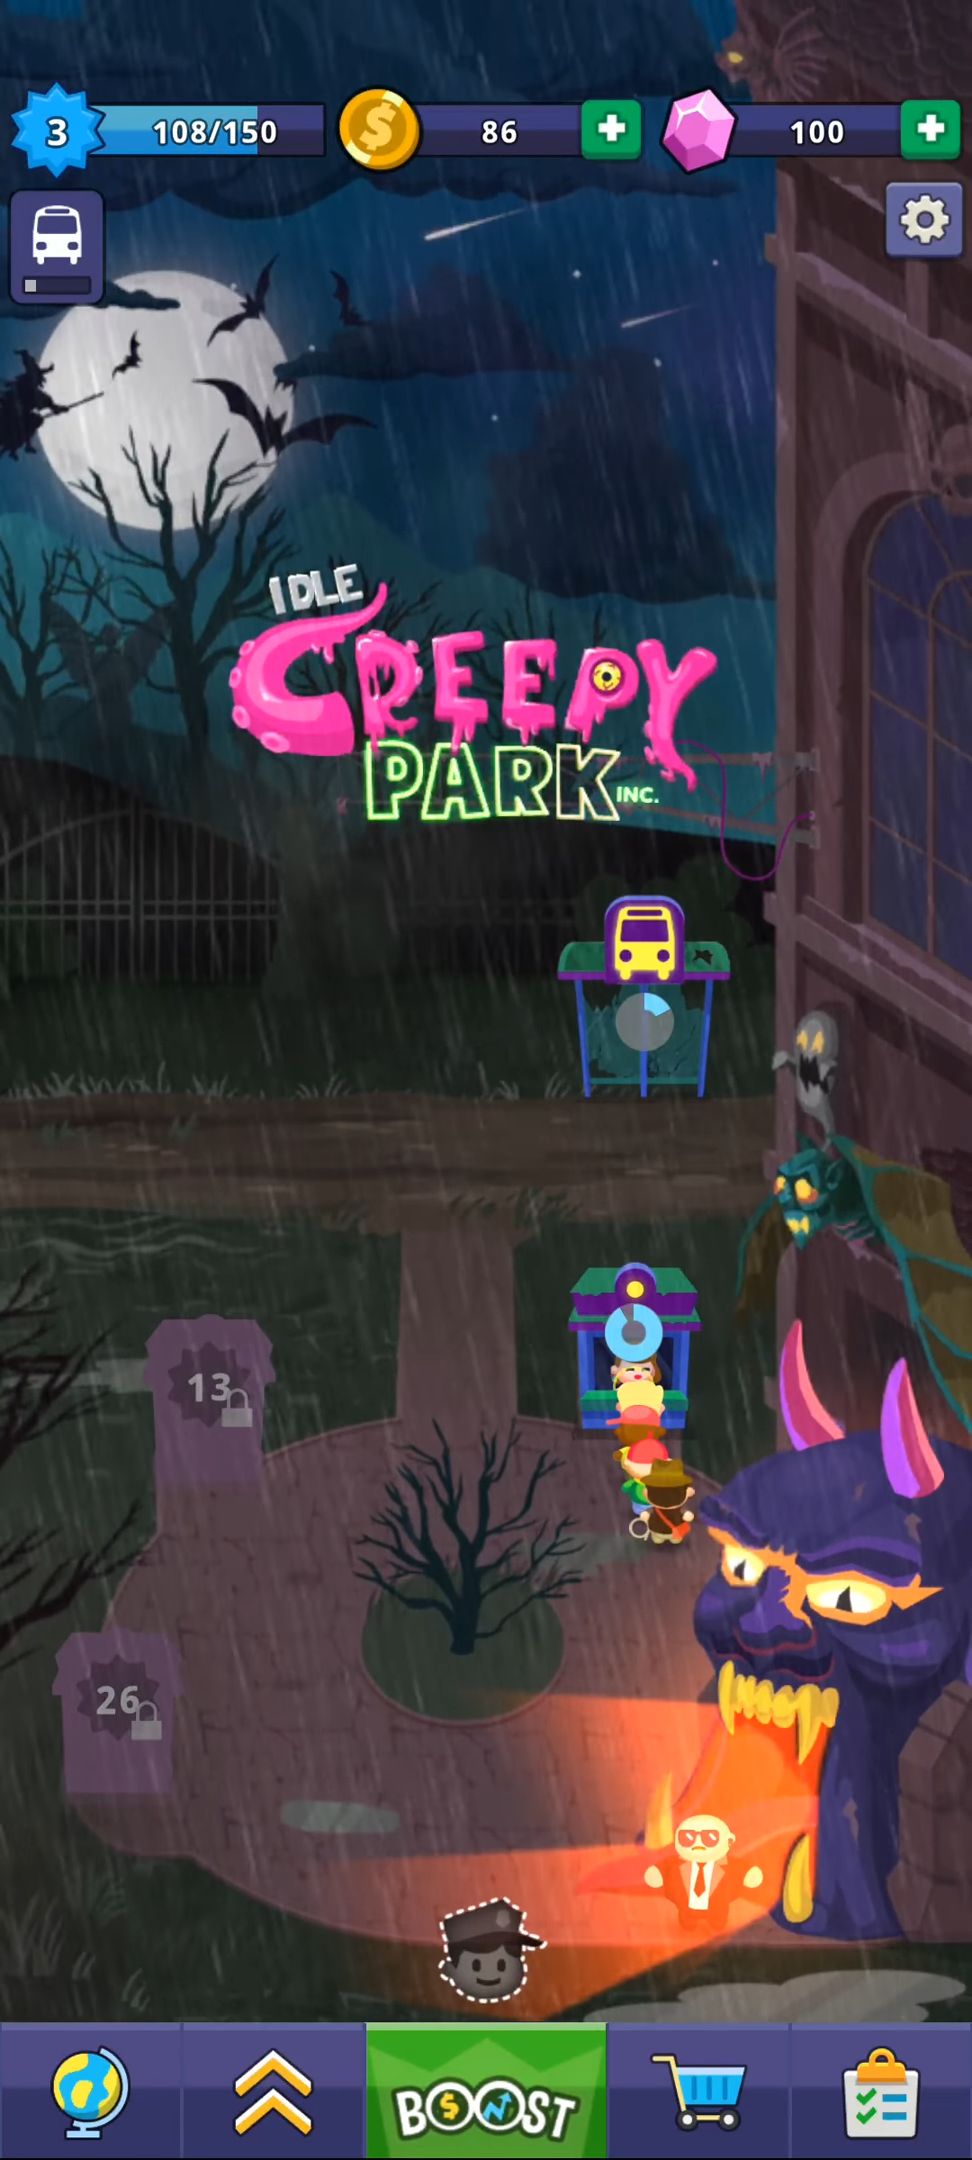 Baixar Idle Creepy Park Inc. para Android grátis.